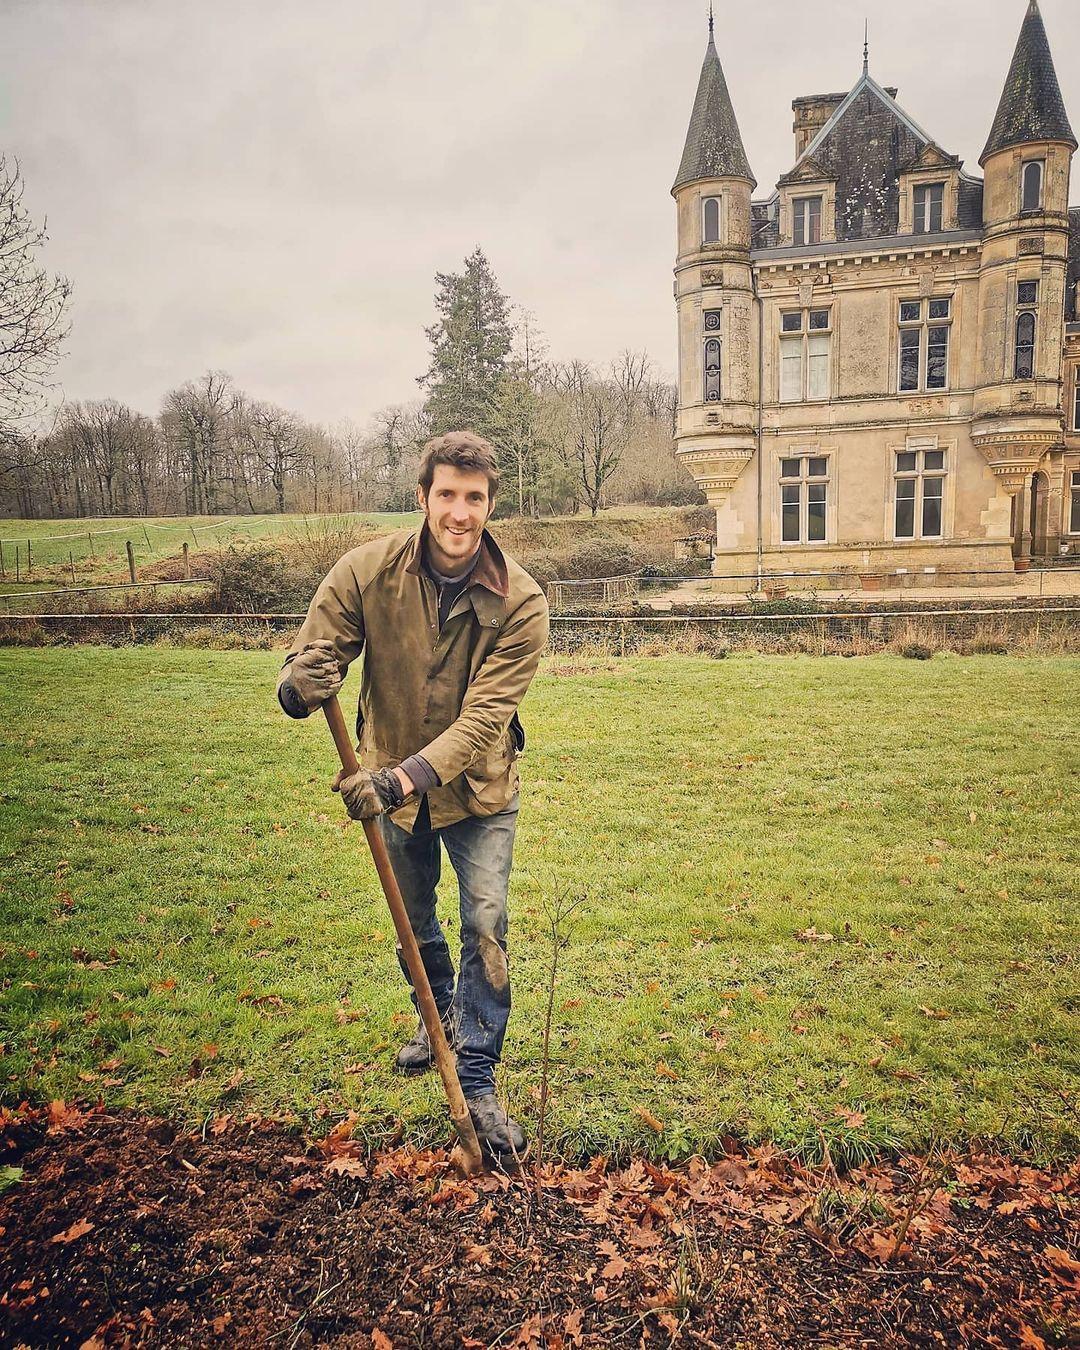 (Courtesy of <a href="https://www.instagram.com/chateaudebourneau/">Château de Bourneau</a> and <a href="https://www.instagram.com/theintrepidchatelaine/">The Intrepid Chatelaine</a>)